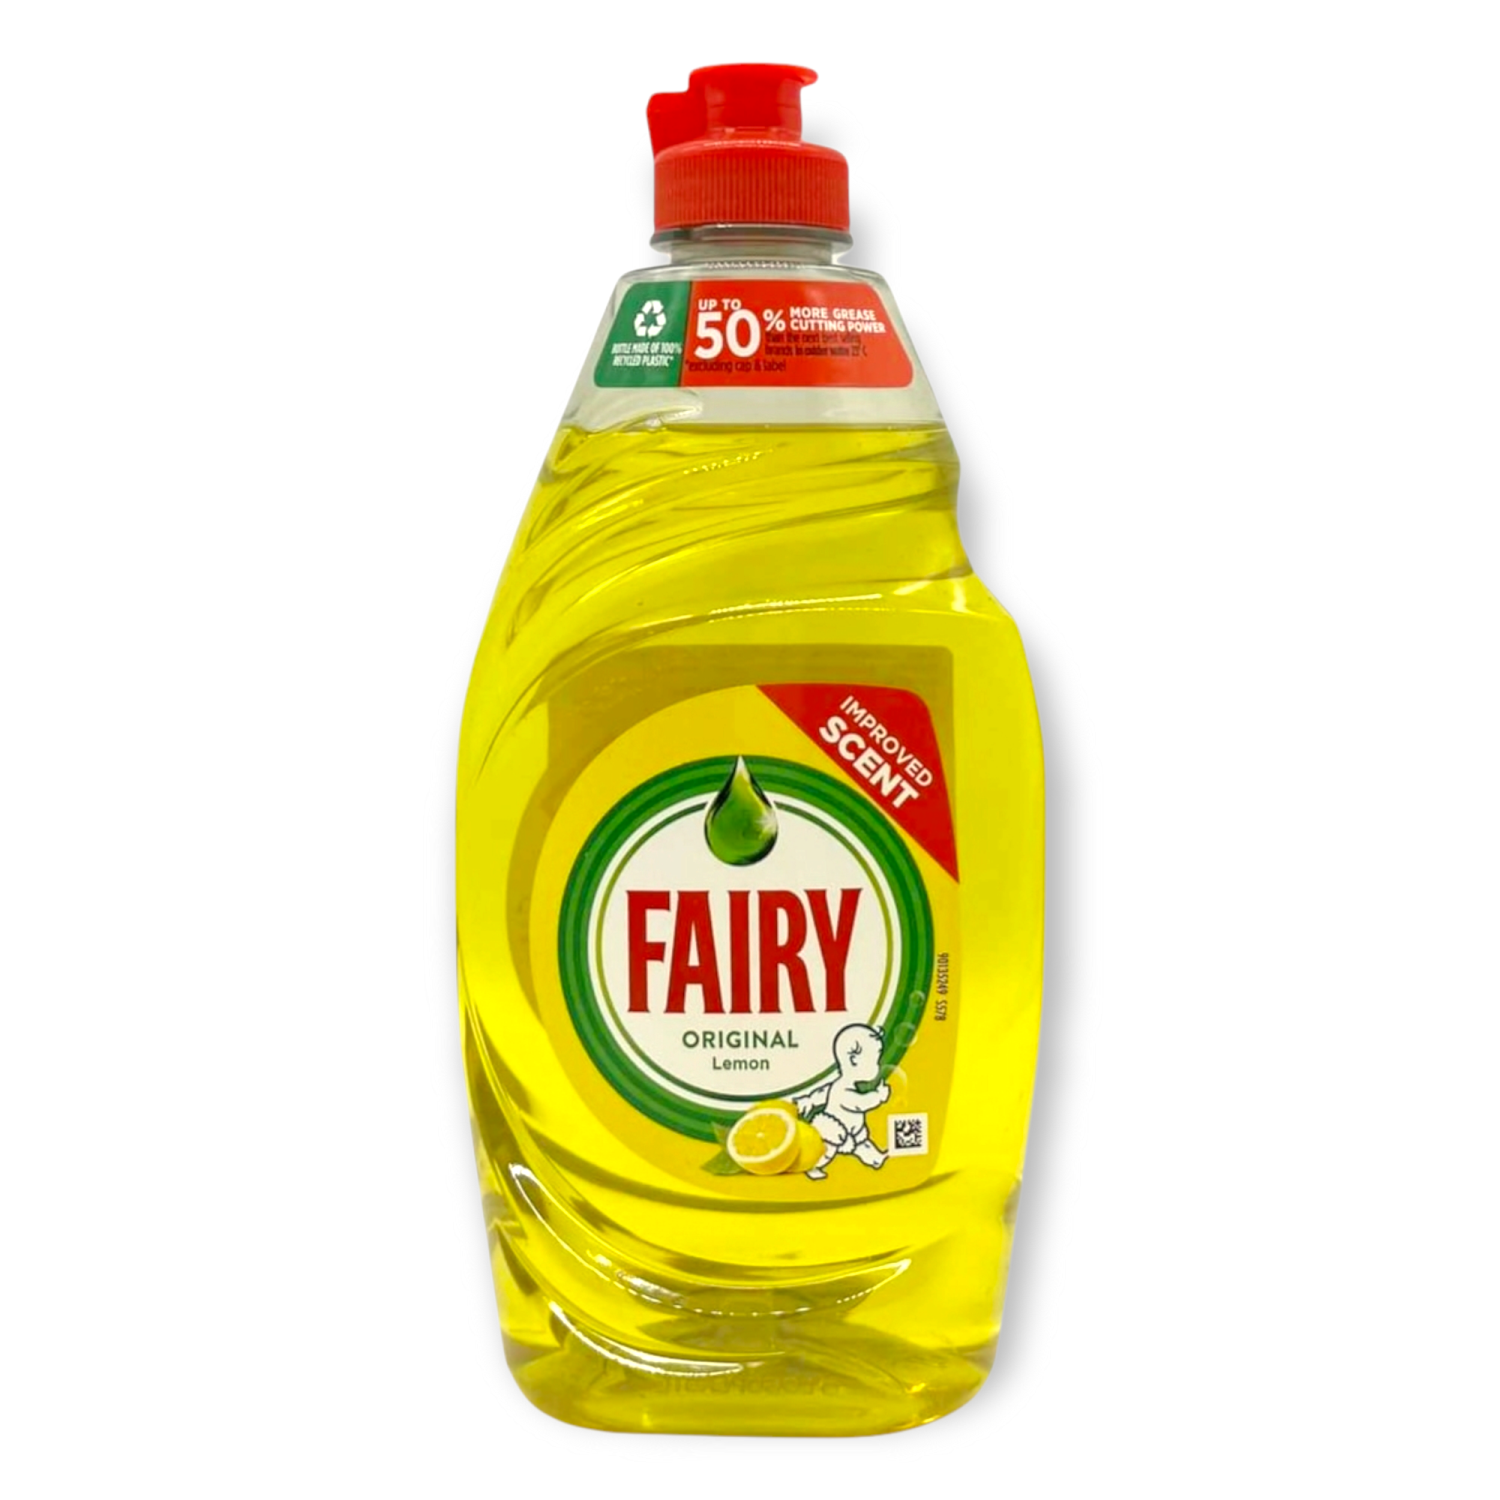 Fairy Lemon Dishwashing Liquid 433ml